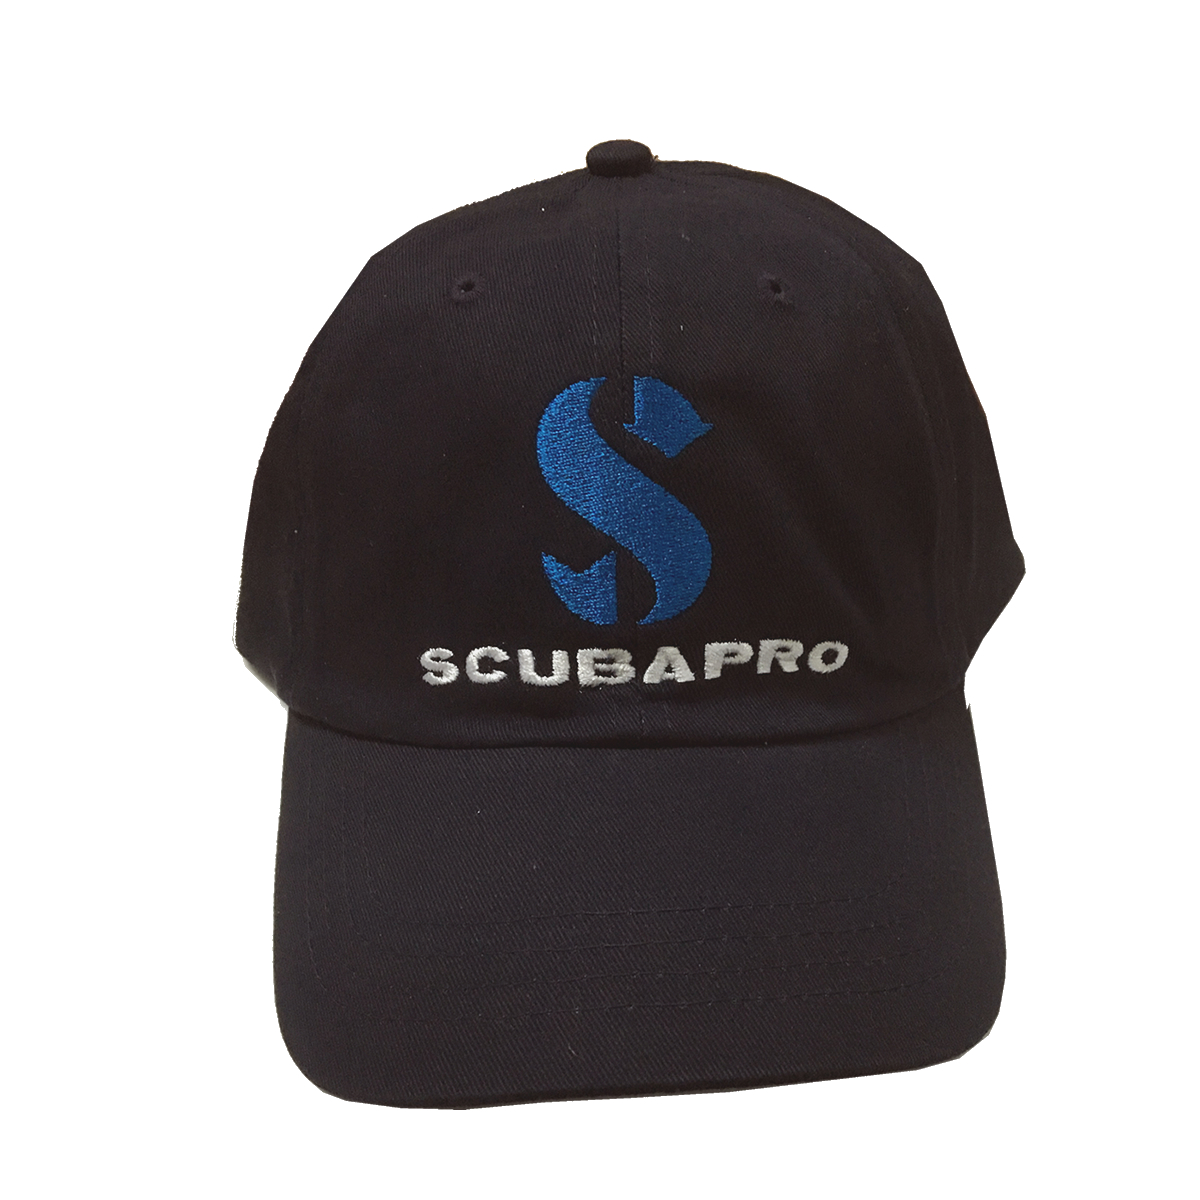 Scubapro Navy Blue Baseball Cap